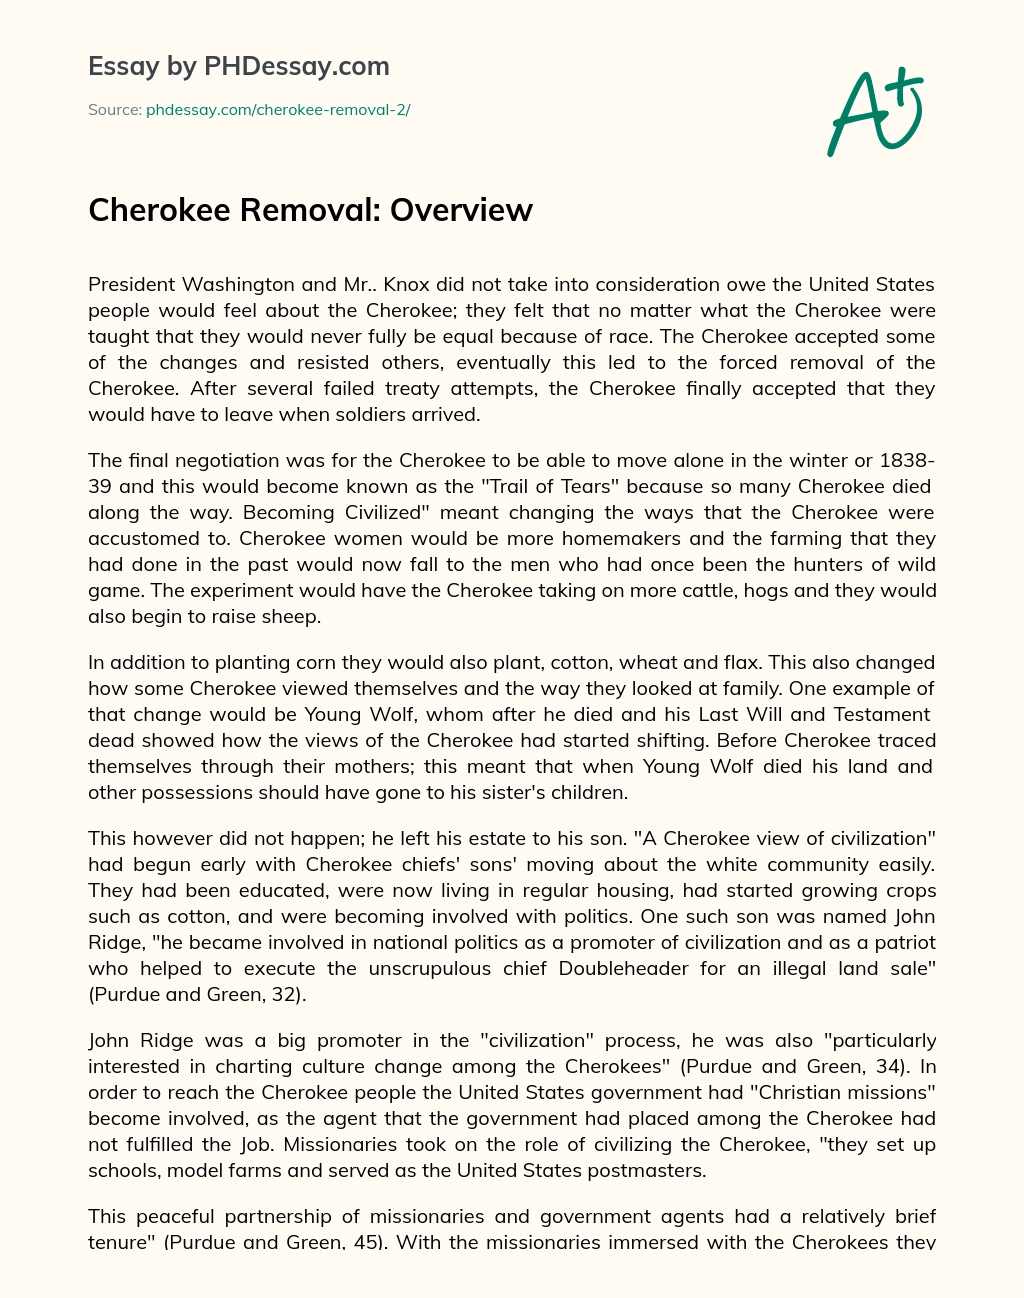 cherokee removal essay